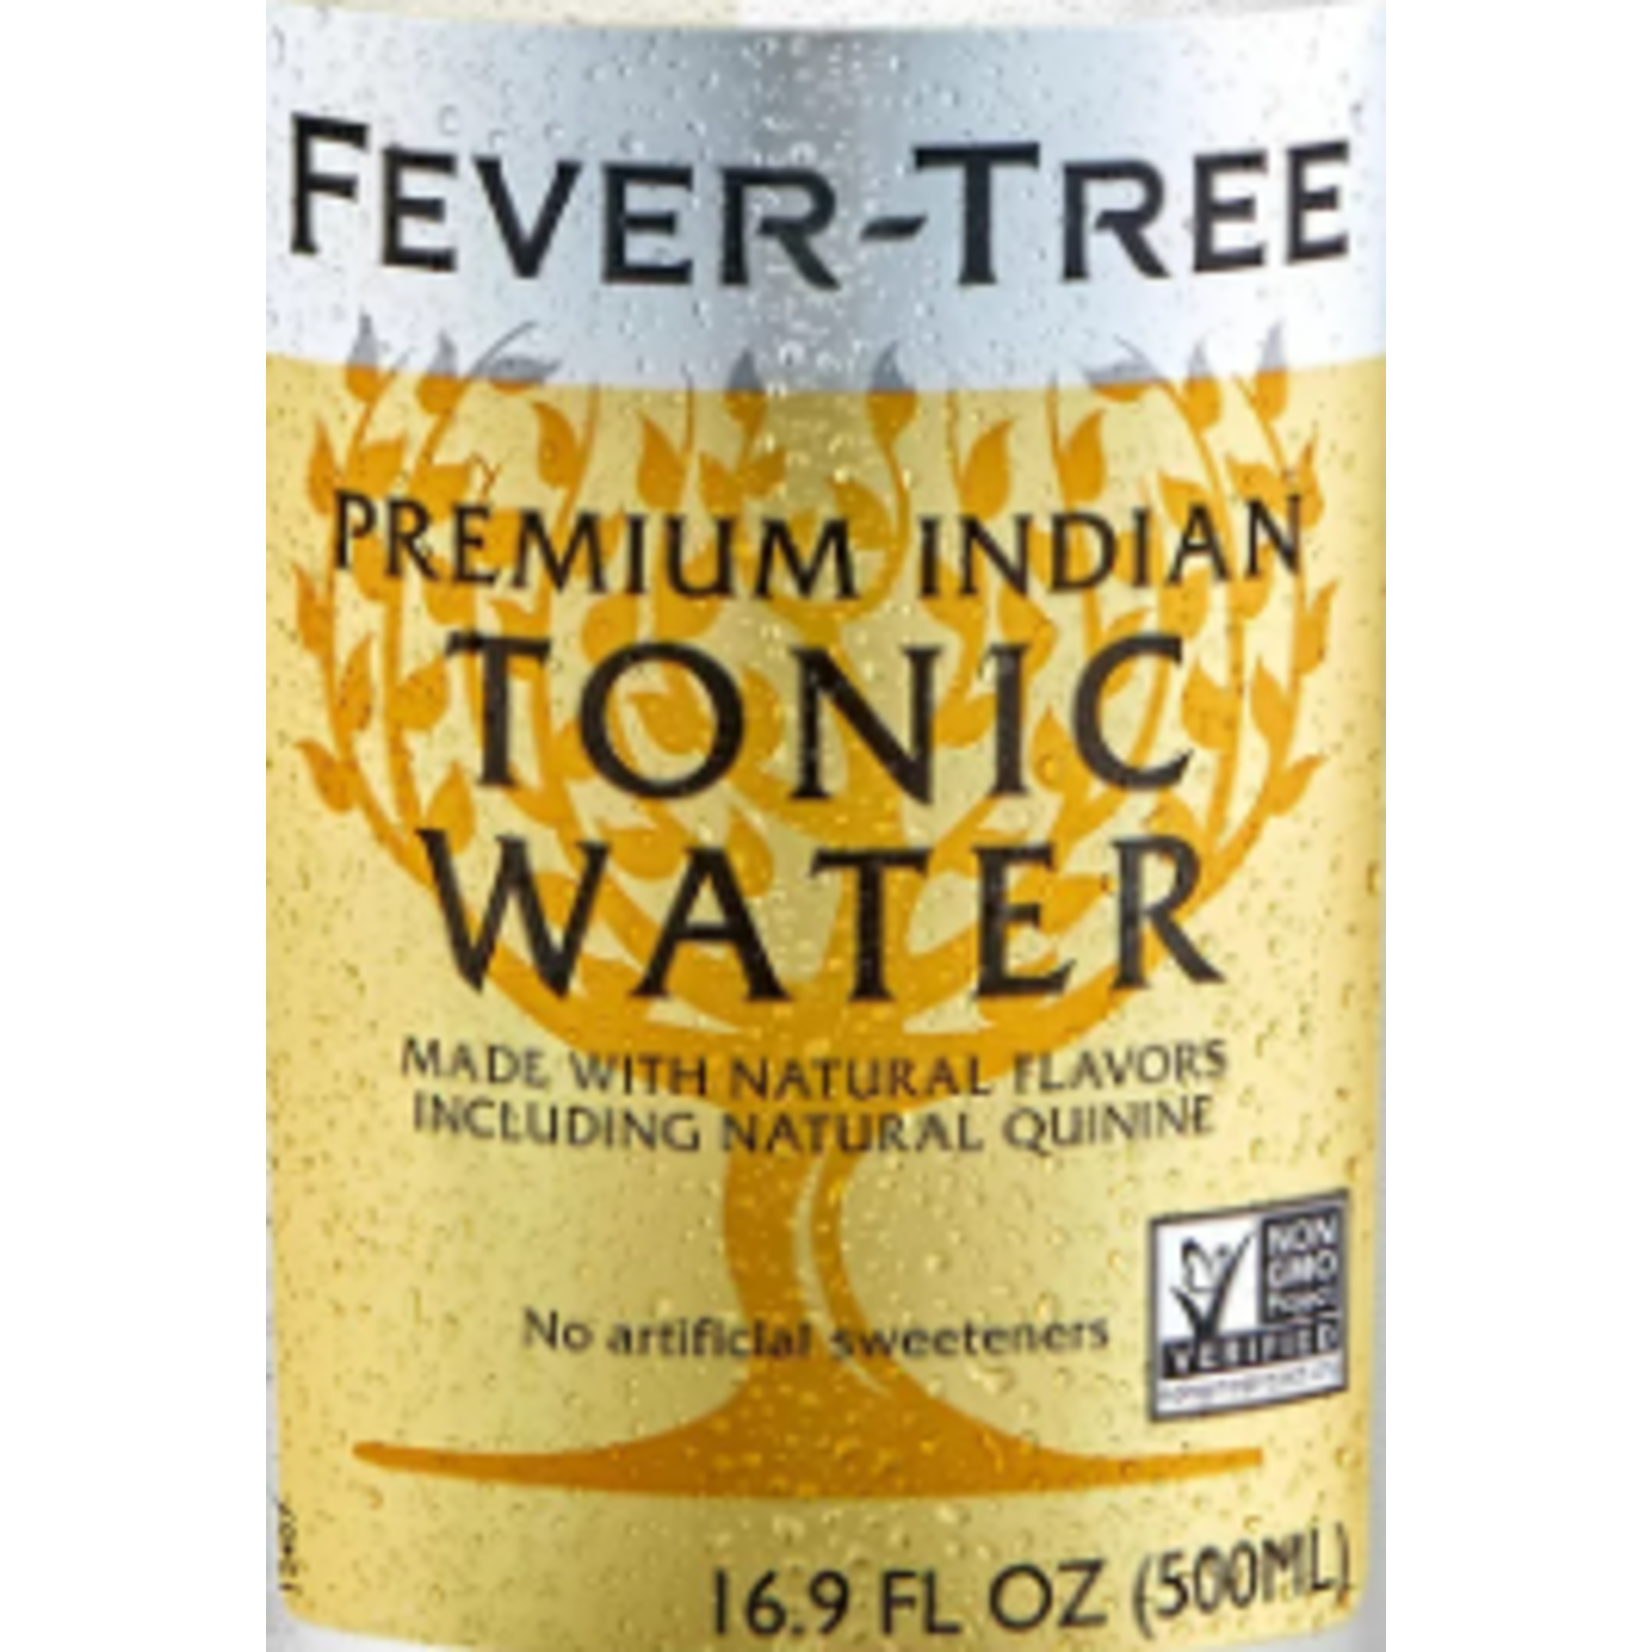 Fever-Tree Fever-Tree Premium Indian Tonic Water 16.9 fl oz PER BOTTLE